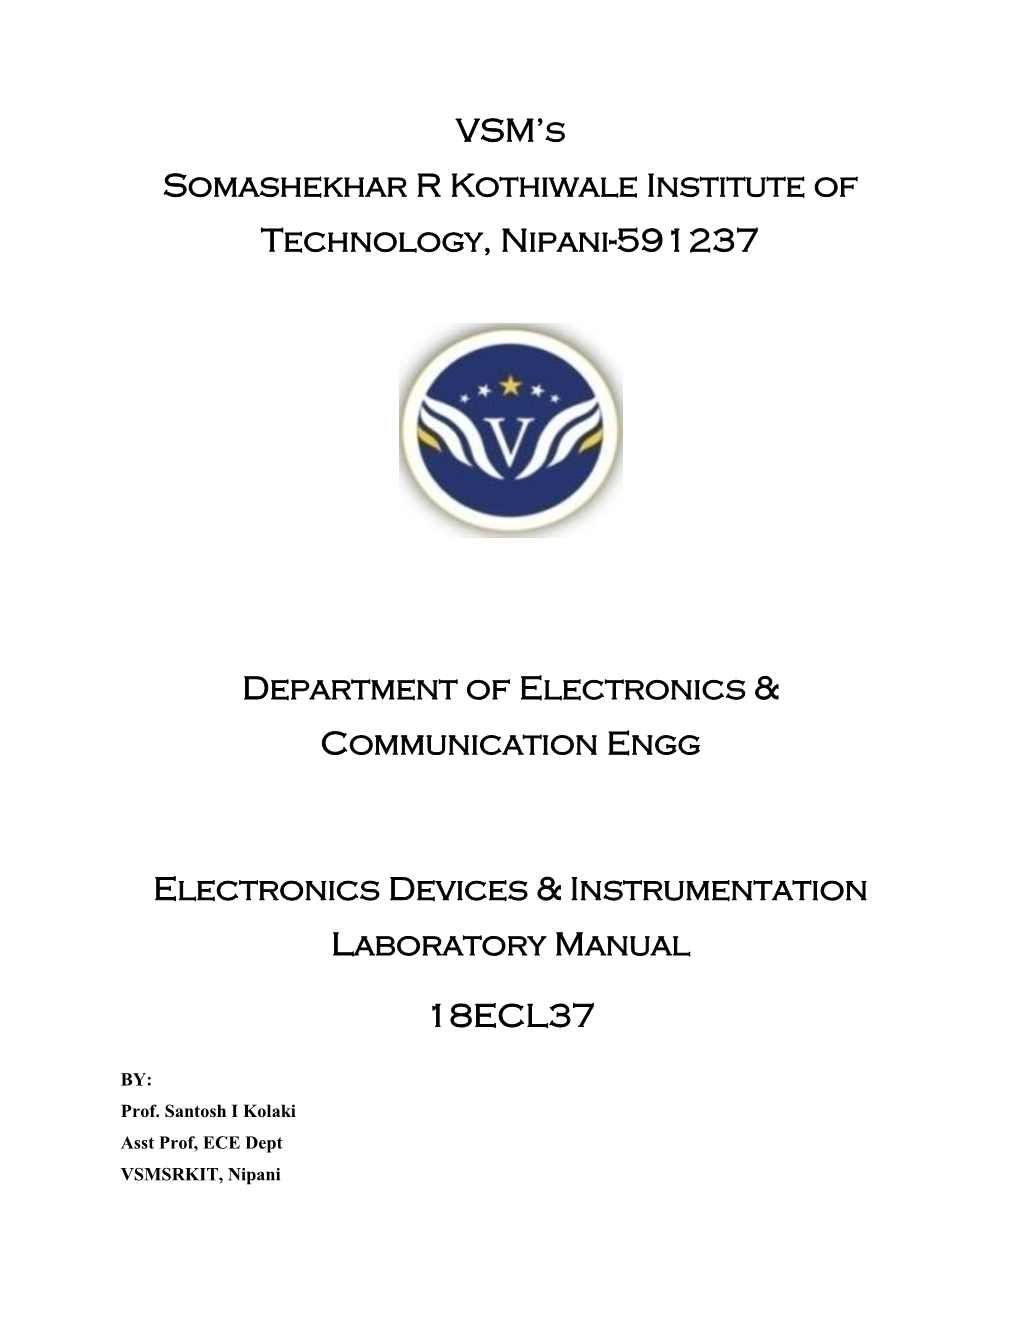 Electronics Devices& Instrumentation